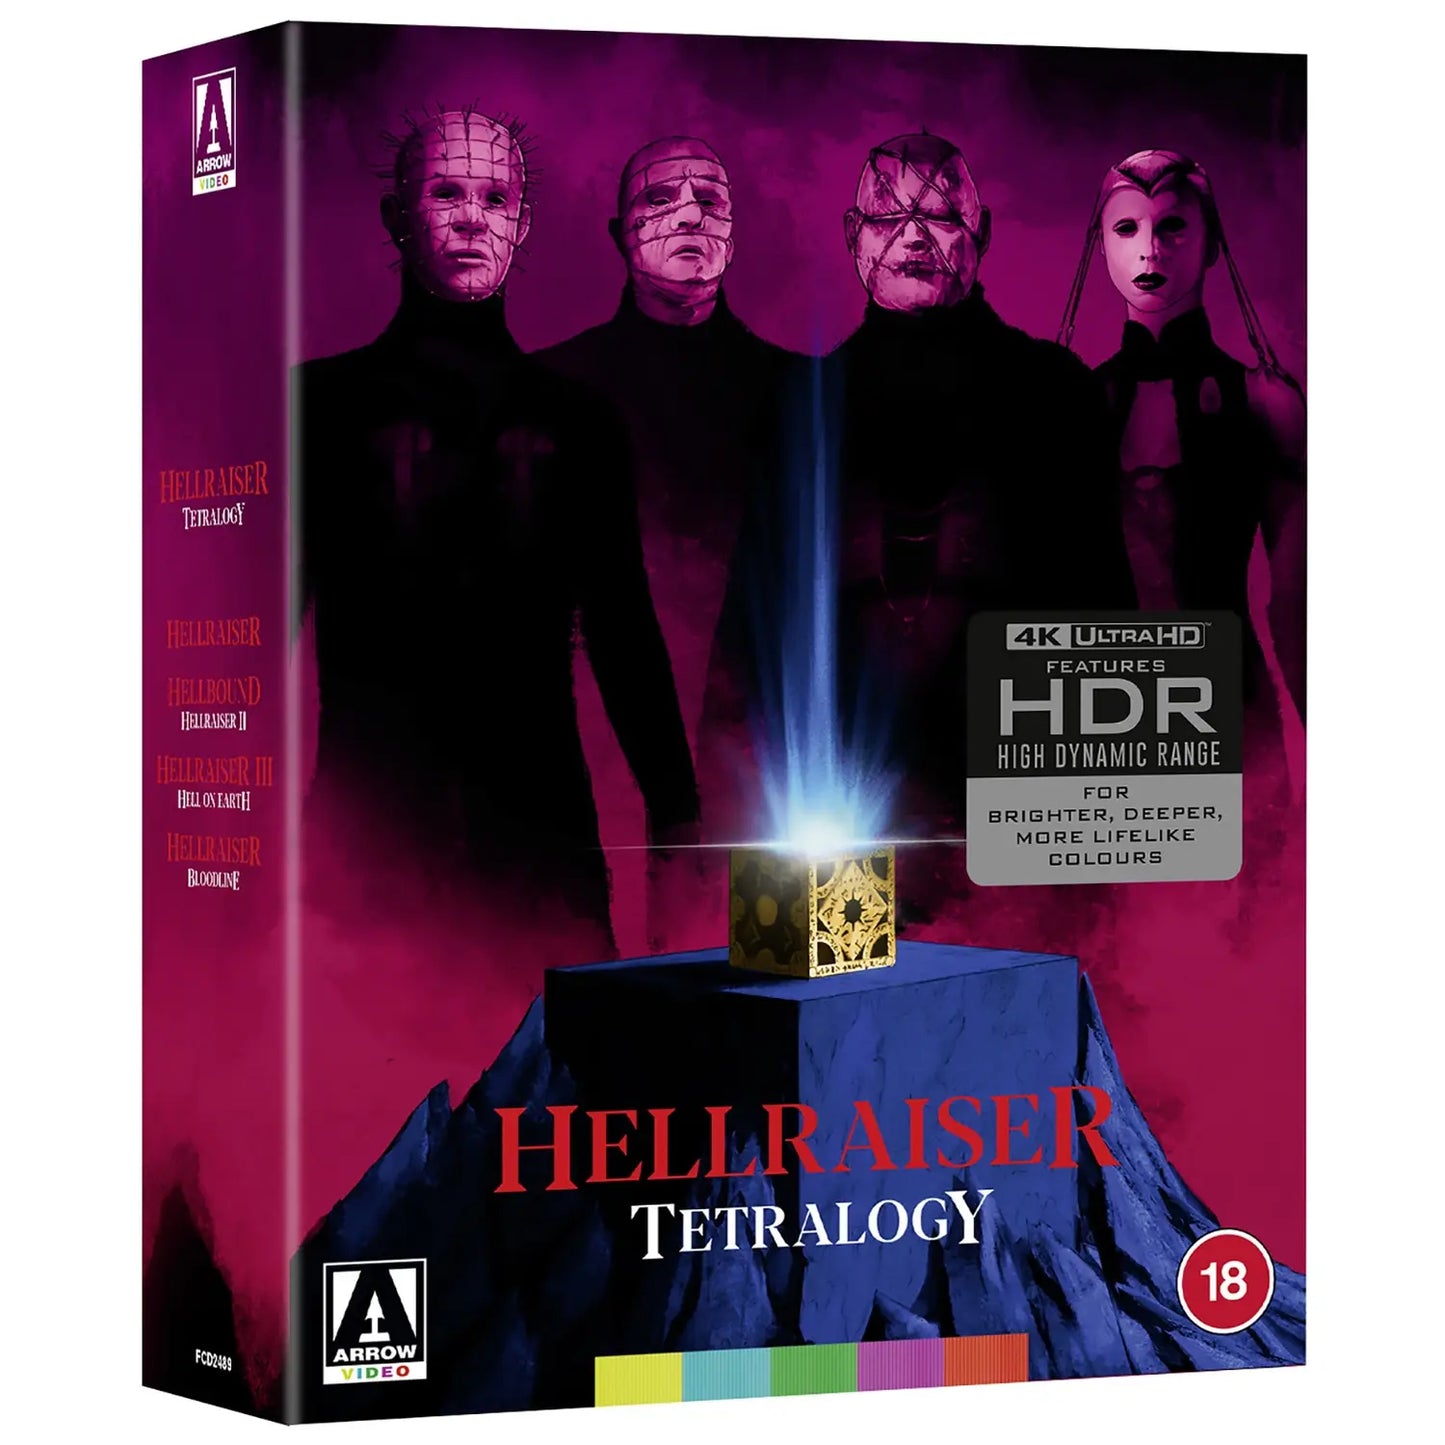 Hellraiser Tetralogy 4K UHD (Arrow UK/Region Free)